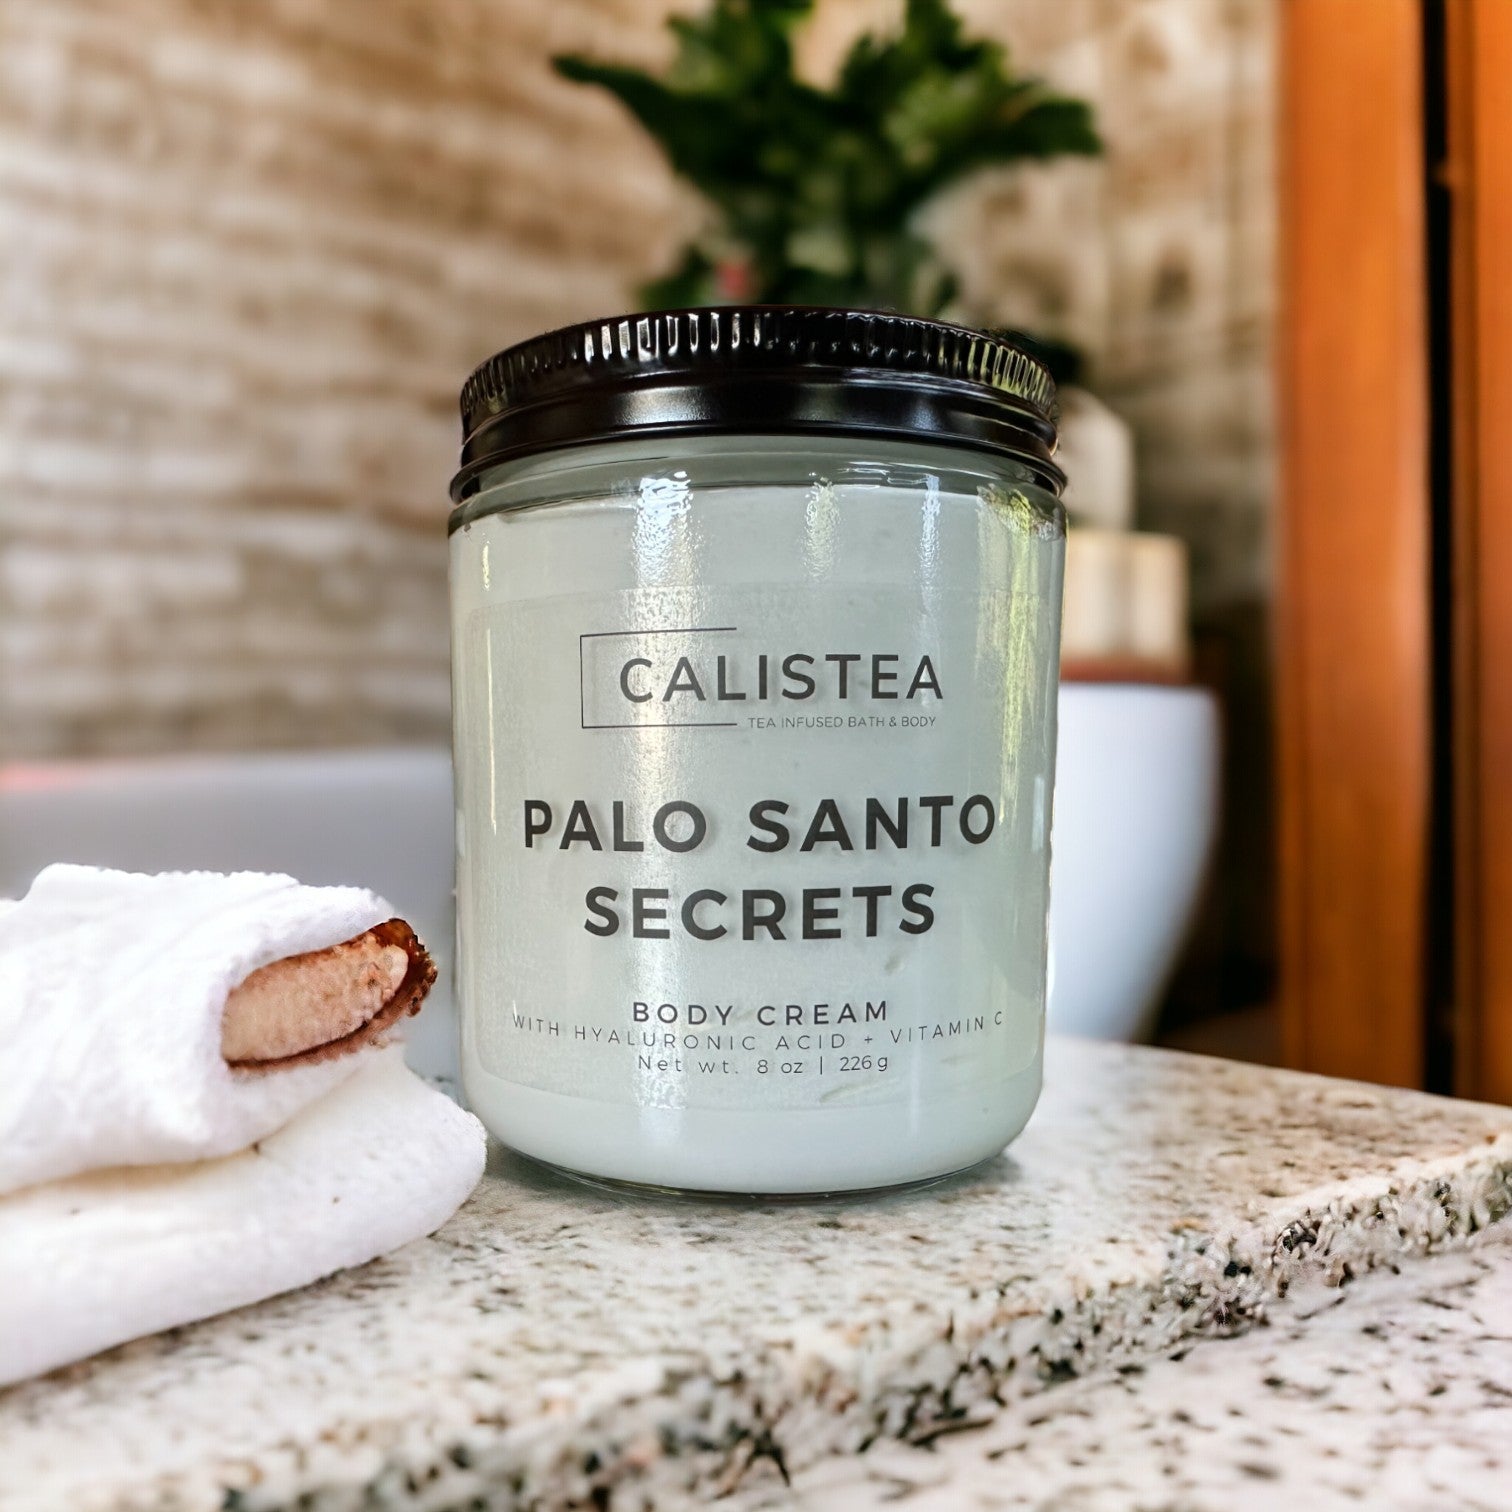 Palo Santo Secrets - Calistea8 oz by volume